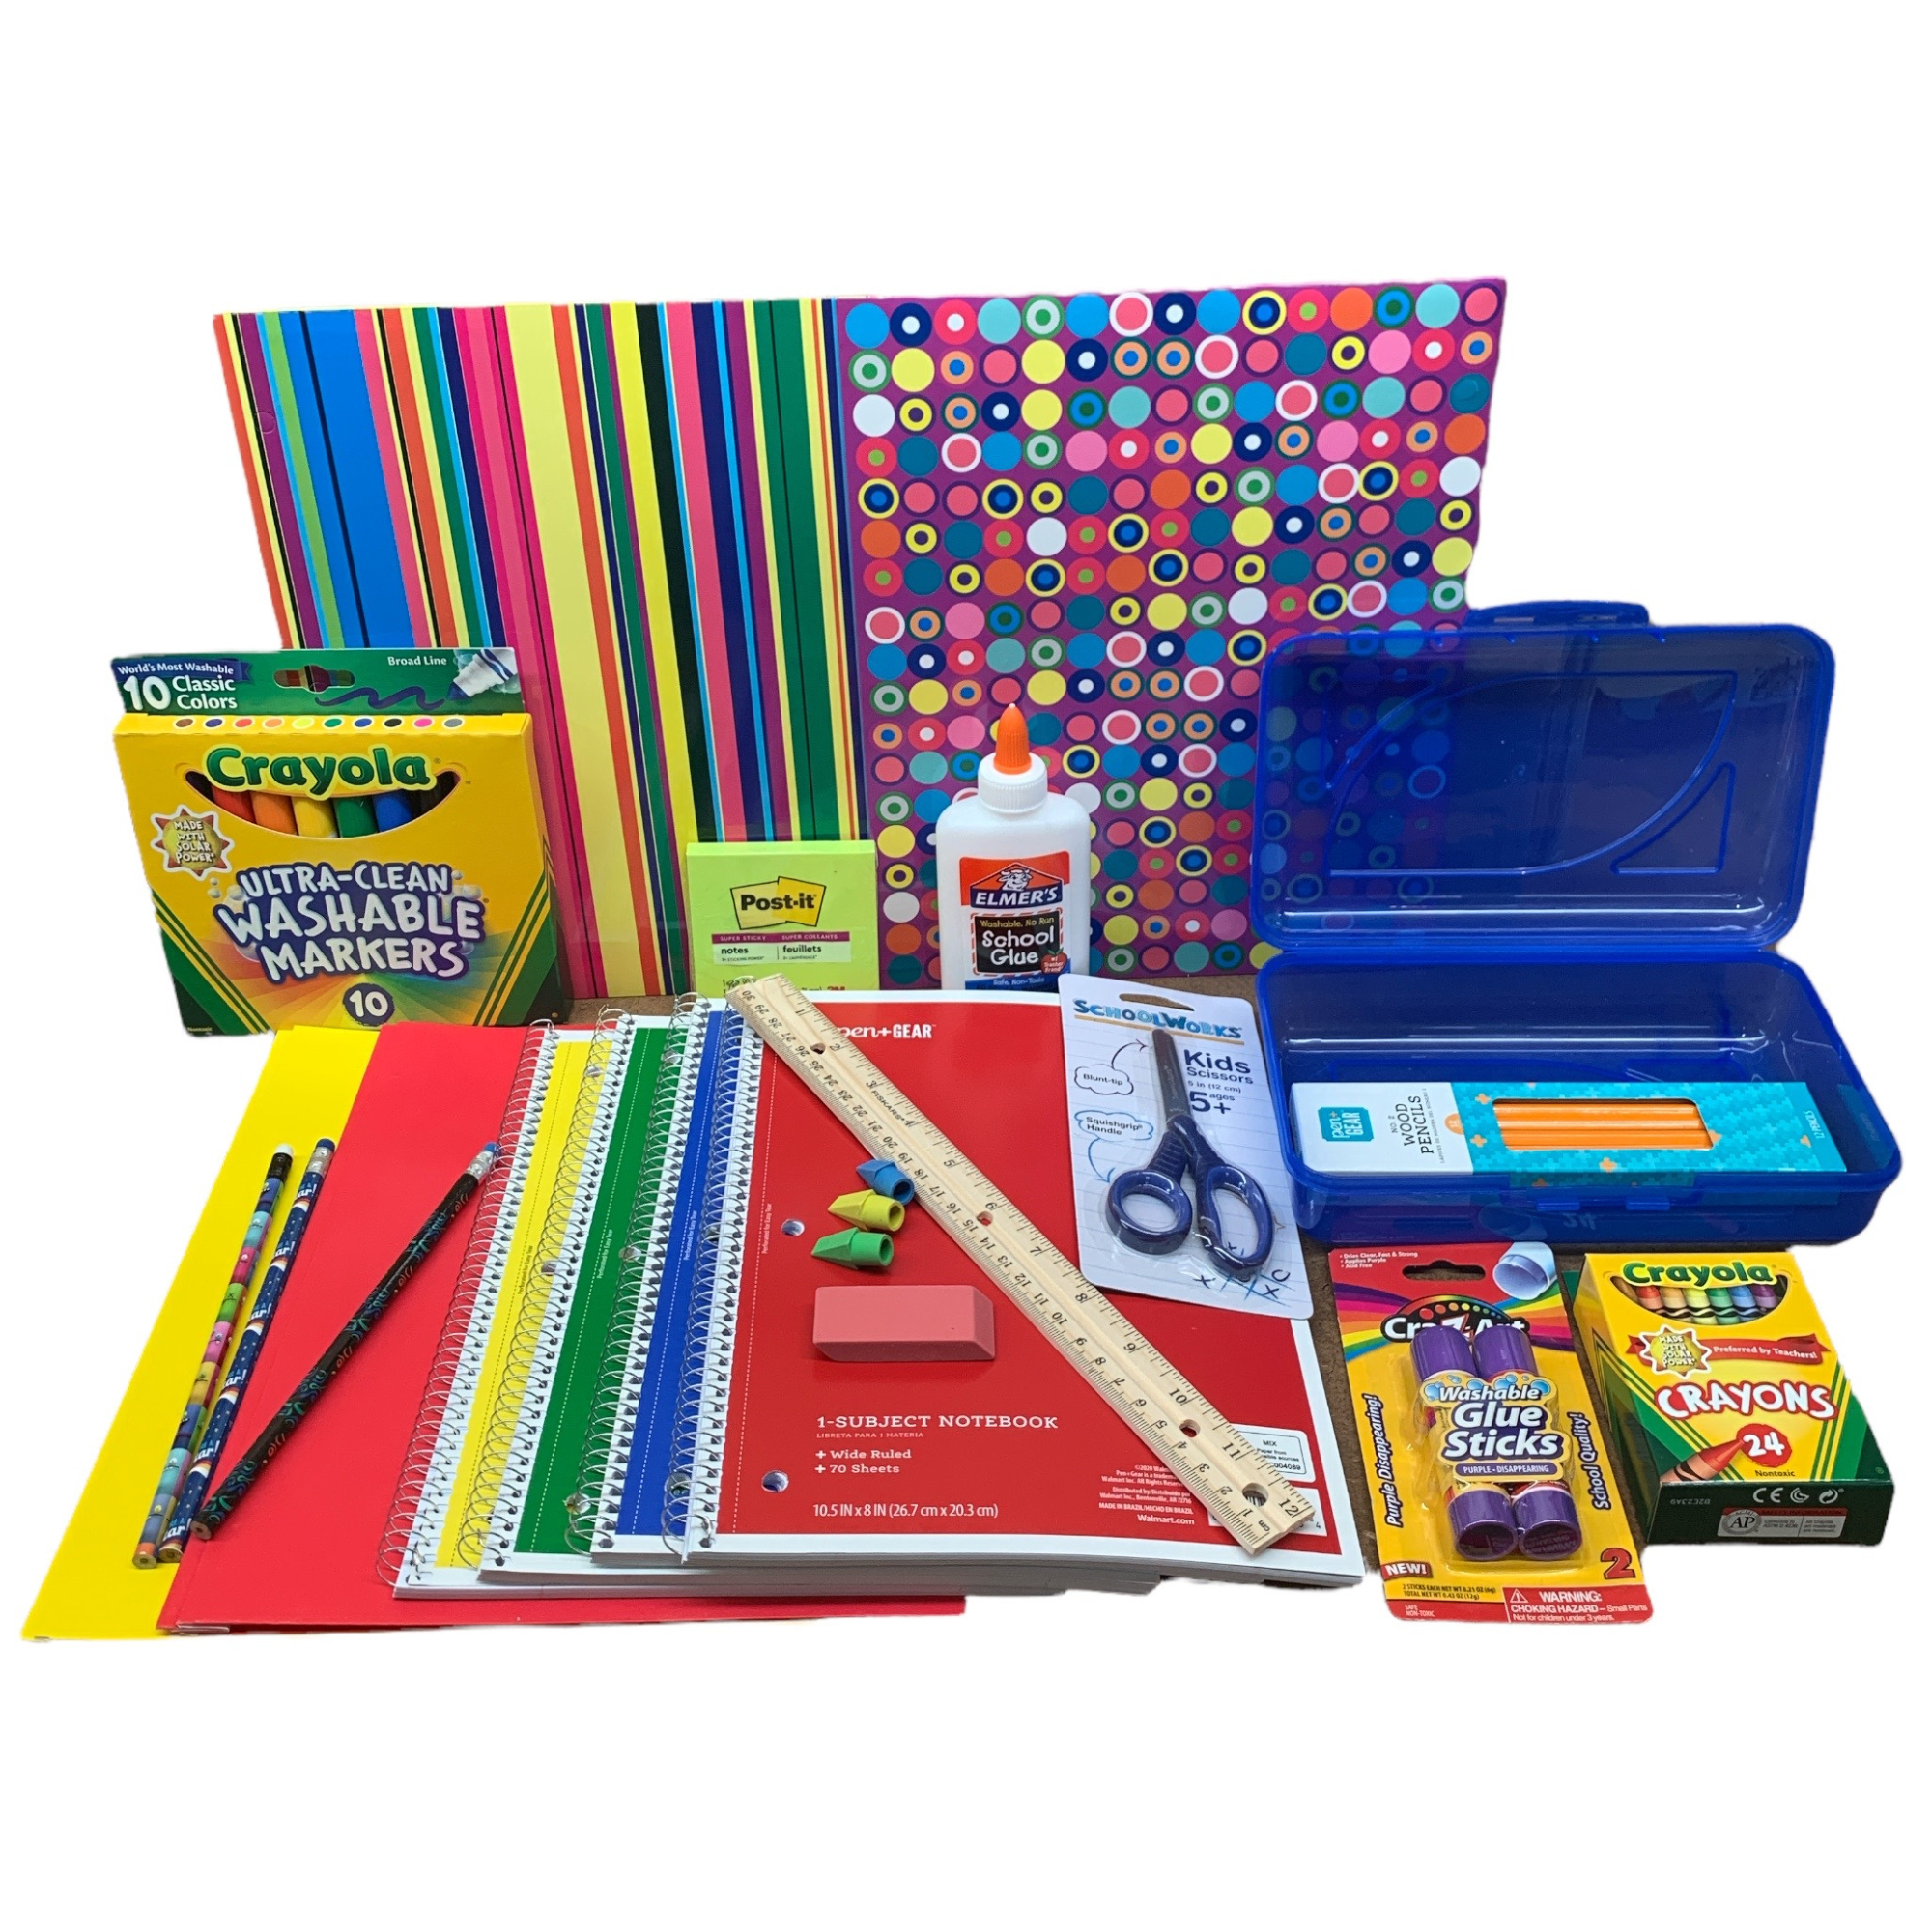 Elementary School Essentials Back to School Kit - School Supplies Bundle -  45 Pieces